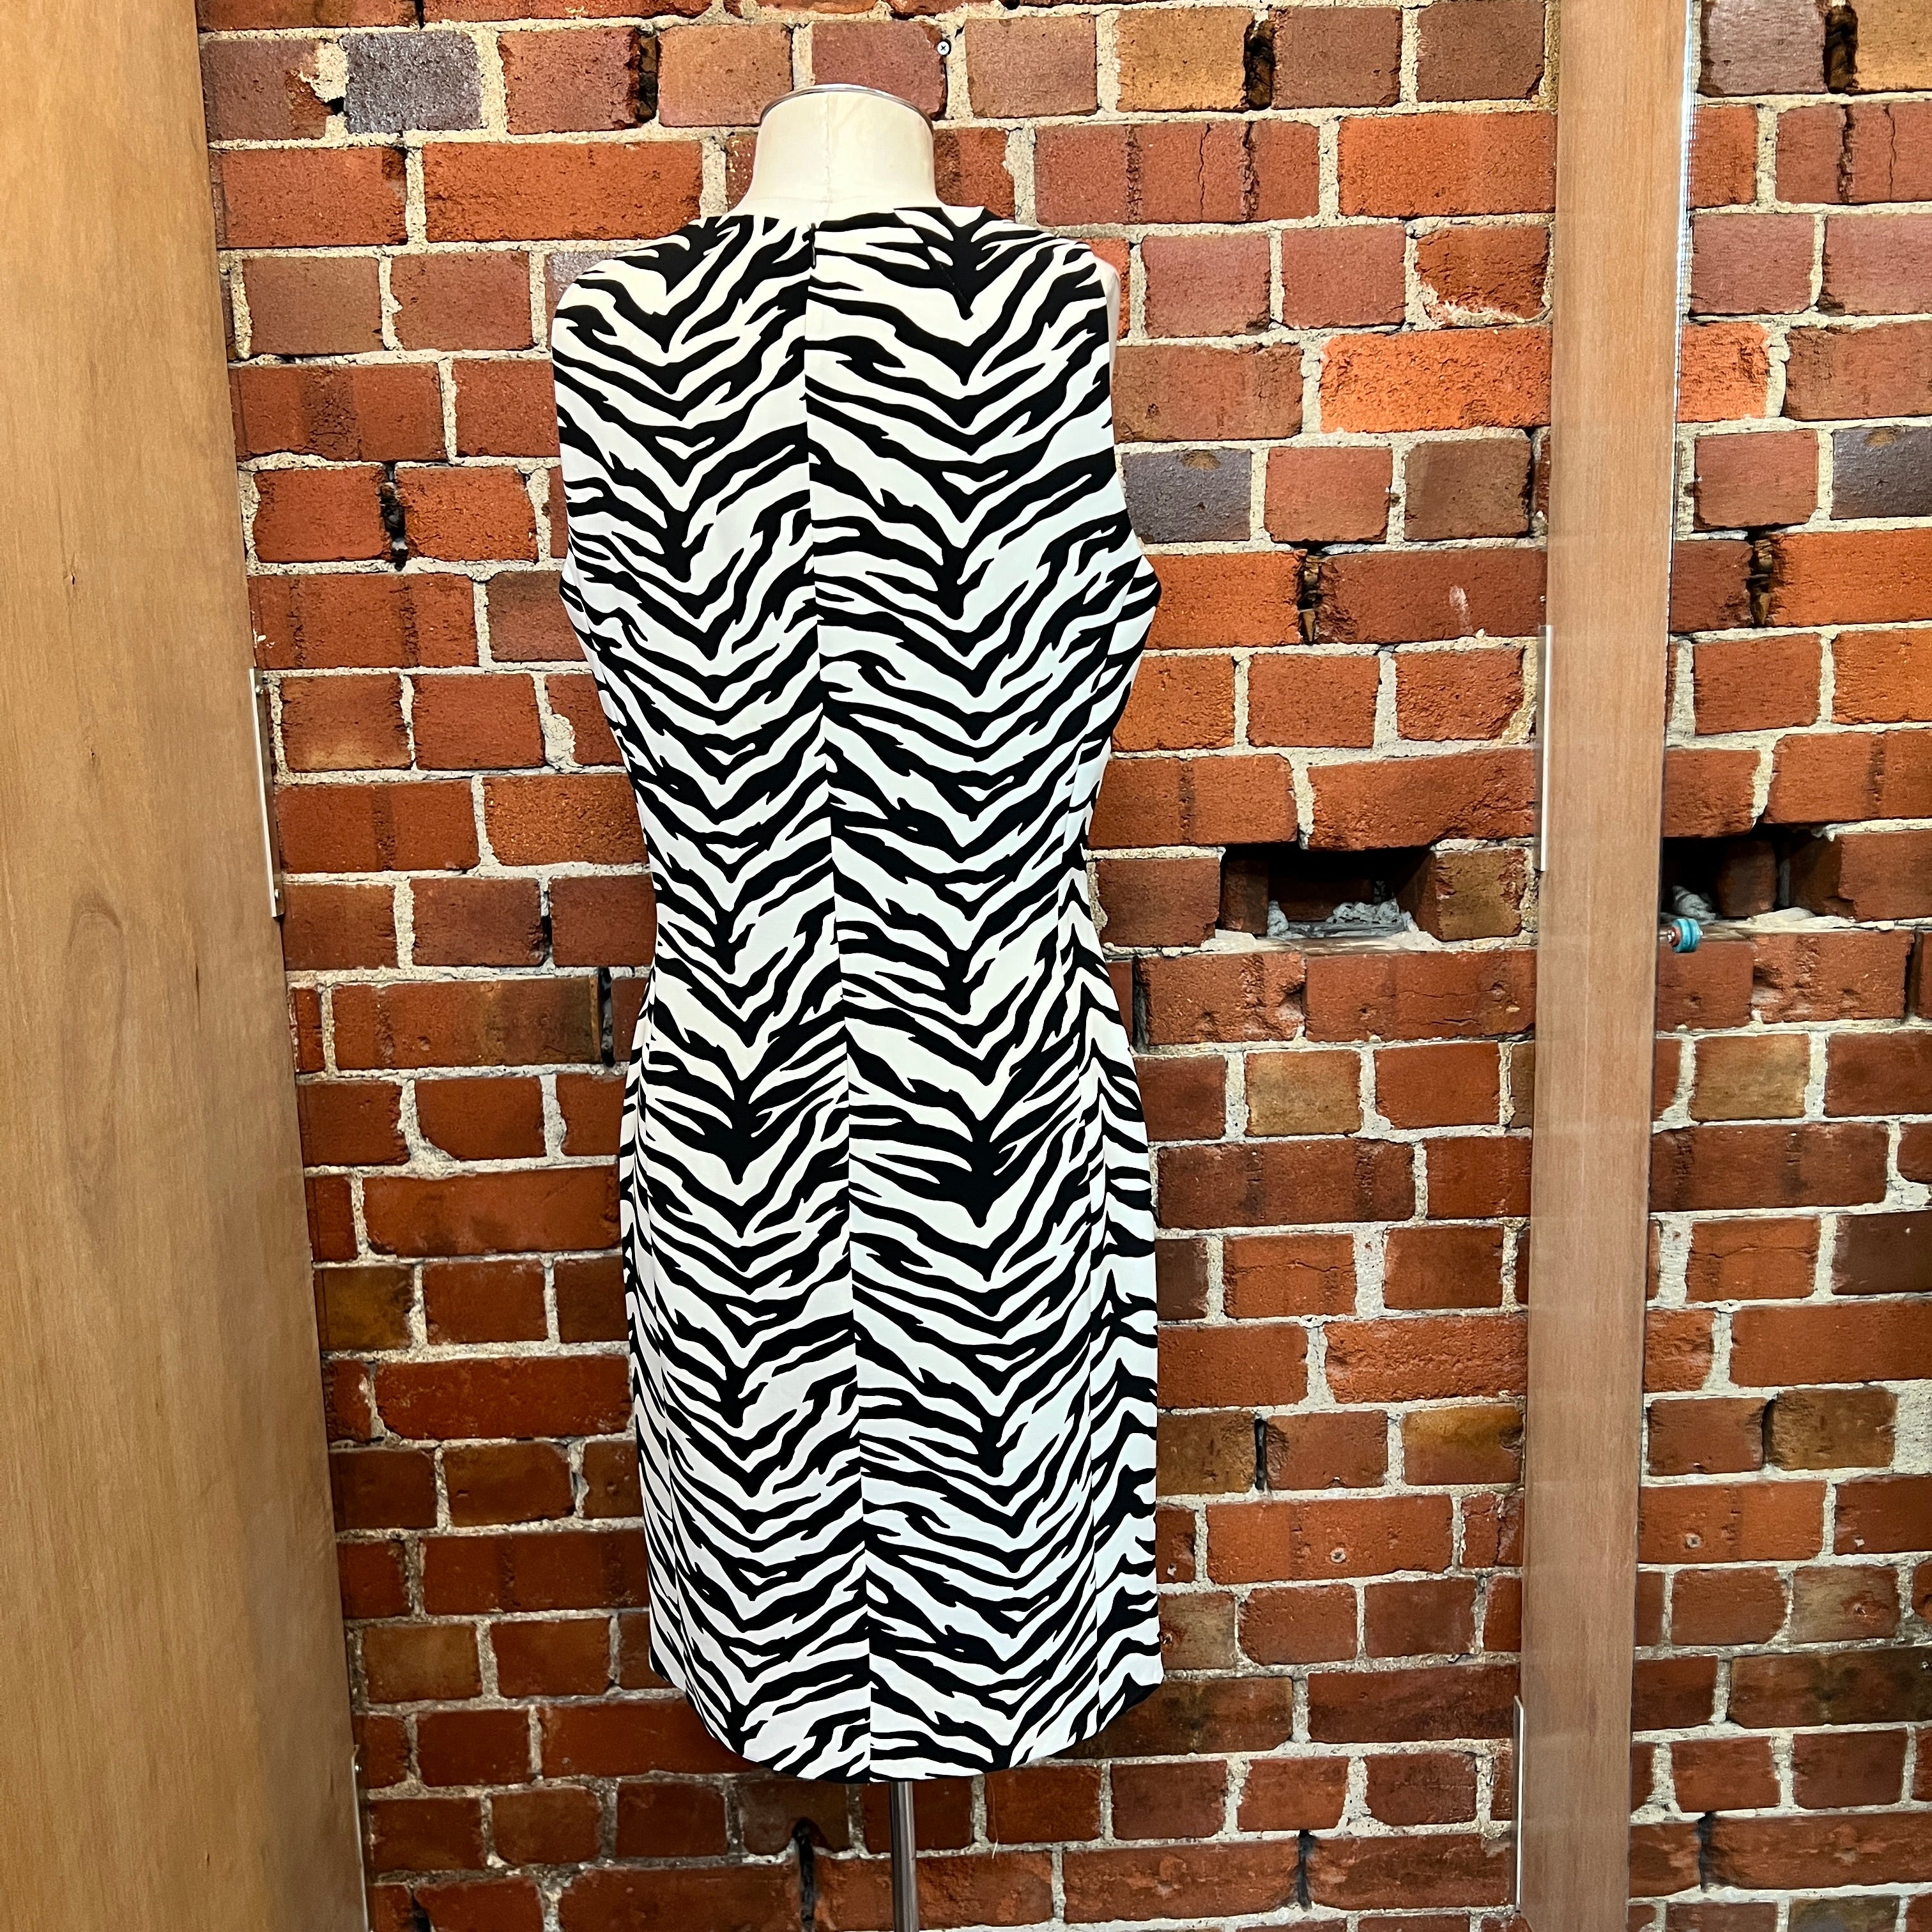 MOSCHINO Zebra print dress